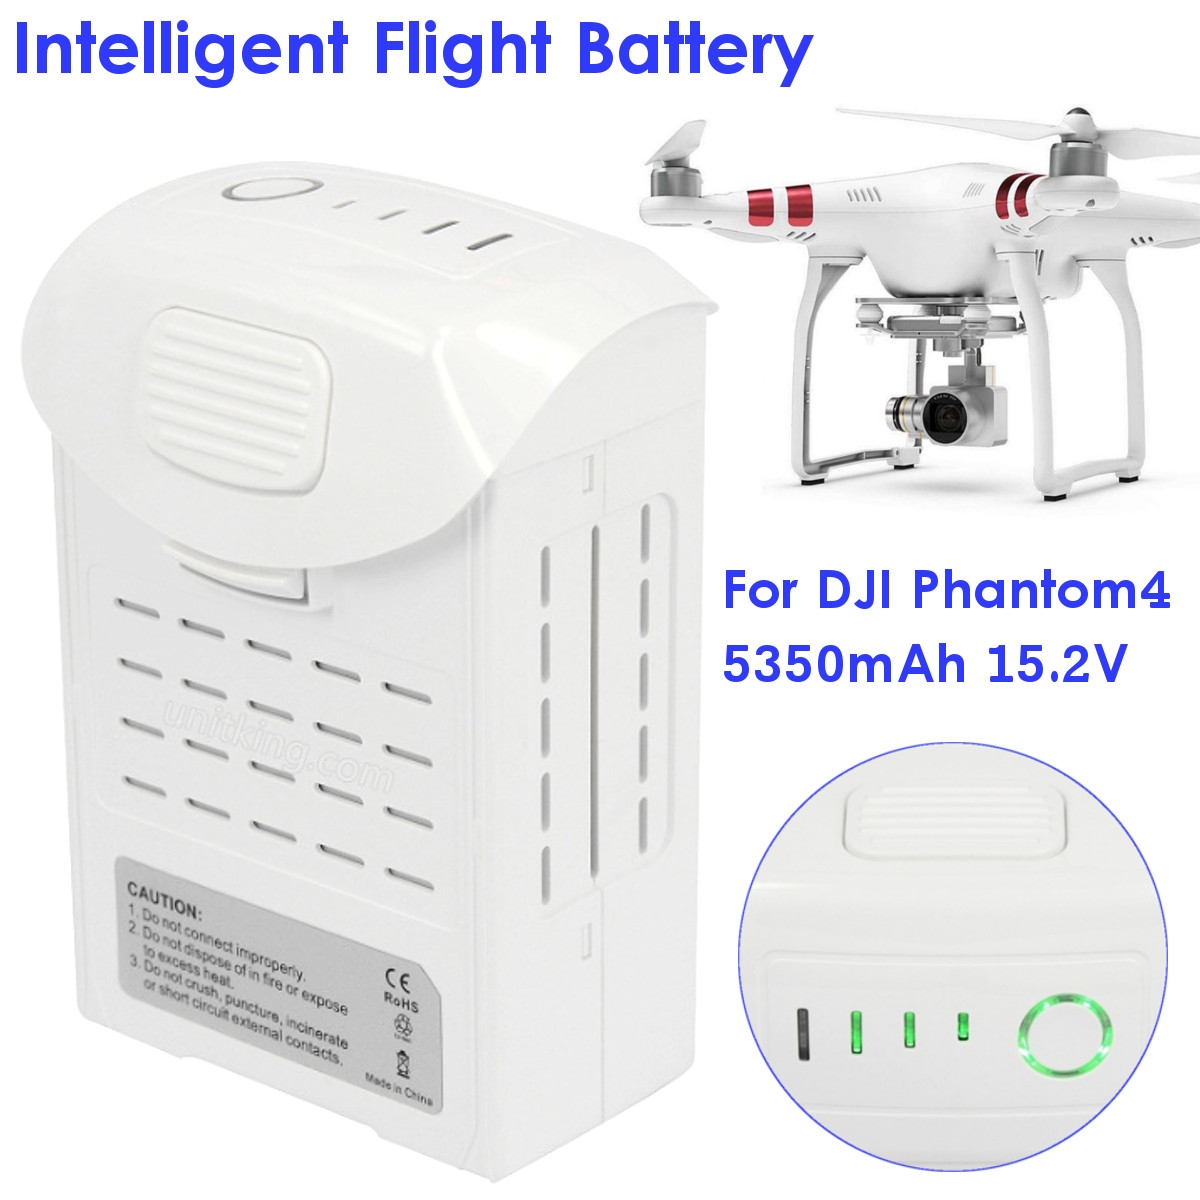 15.2V 5350mAh Lipo Intelligent Flight Battery for DJI Phantom 4 Pro Plus Drones